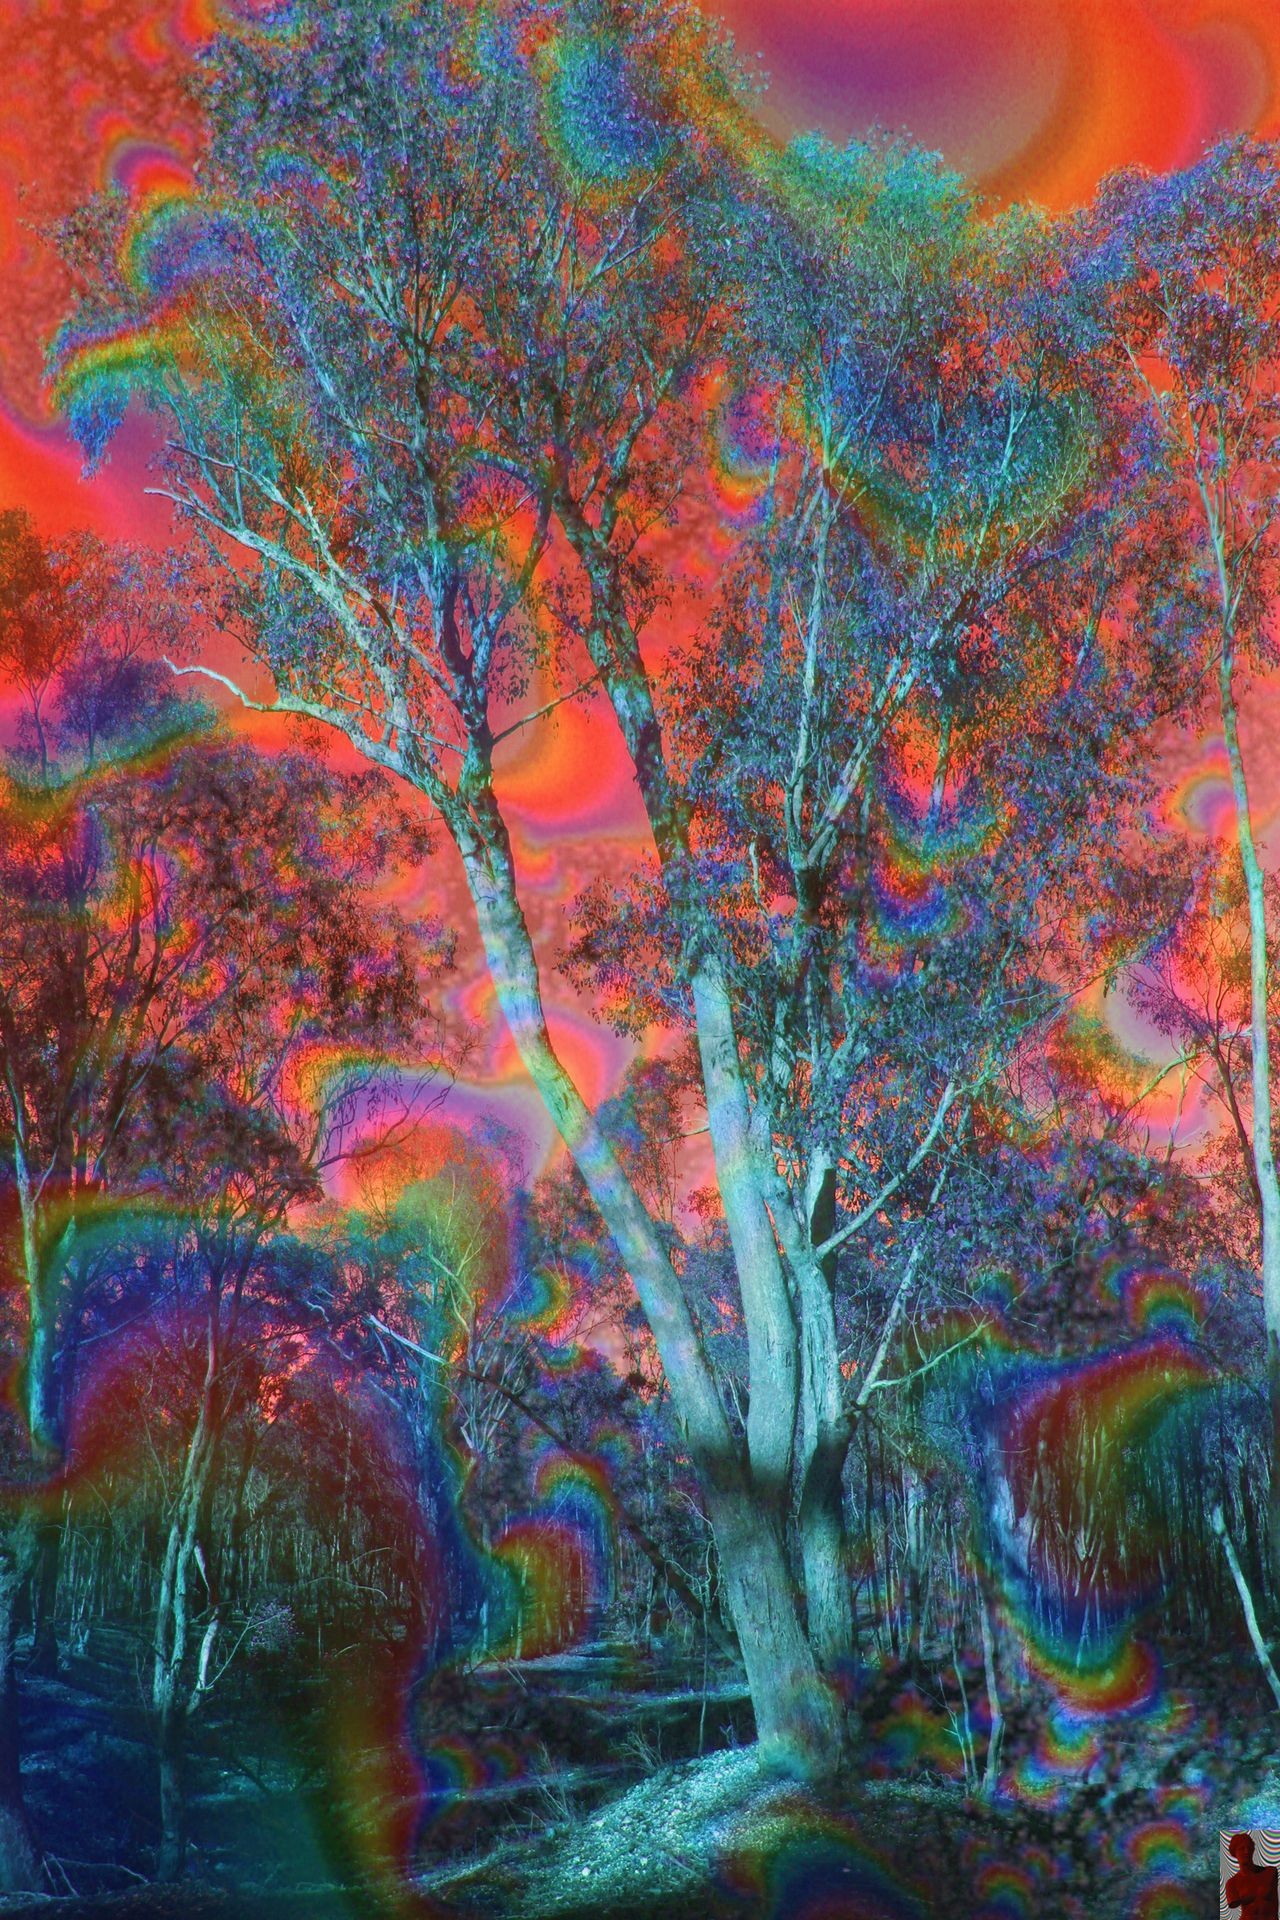 1280x1920 Hippie Wallpaper, Trippy Wallpaper, Acid Wallpaper, Iphone Wallpaper, Acid  Trip